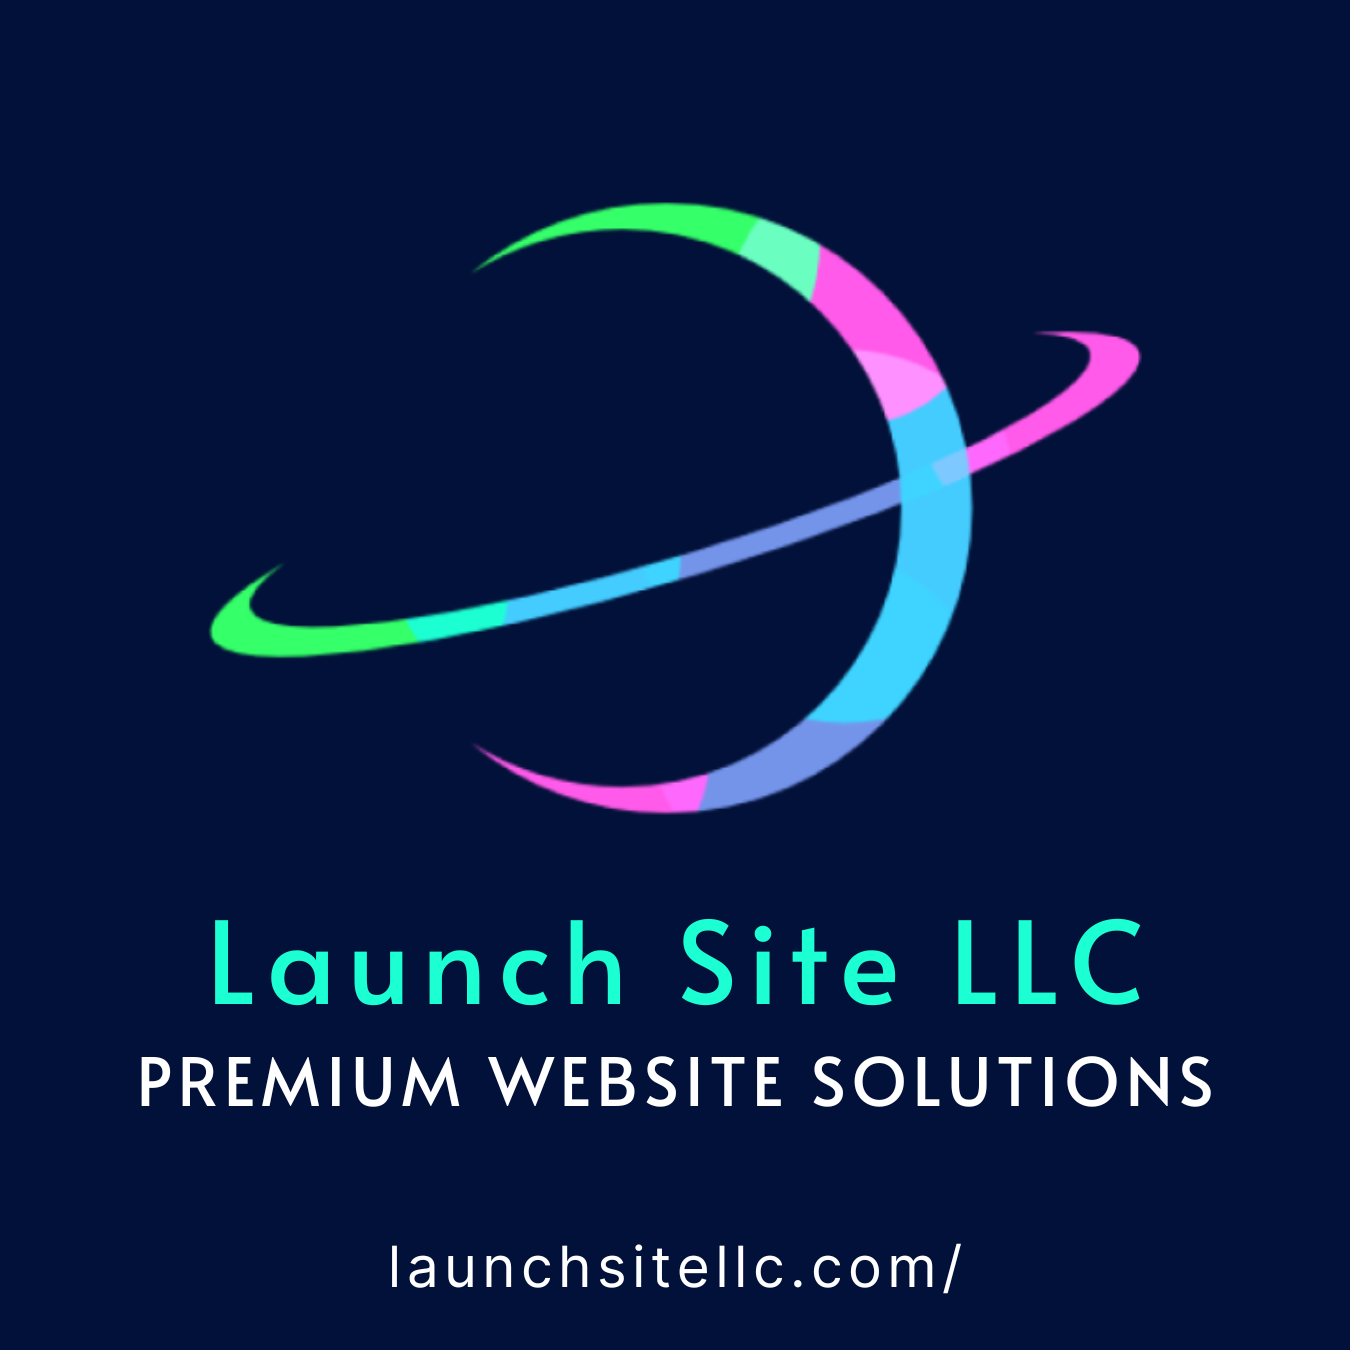 Launch Site LLC